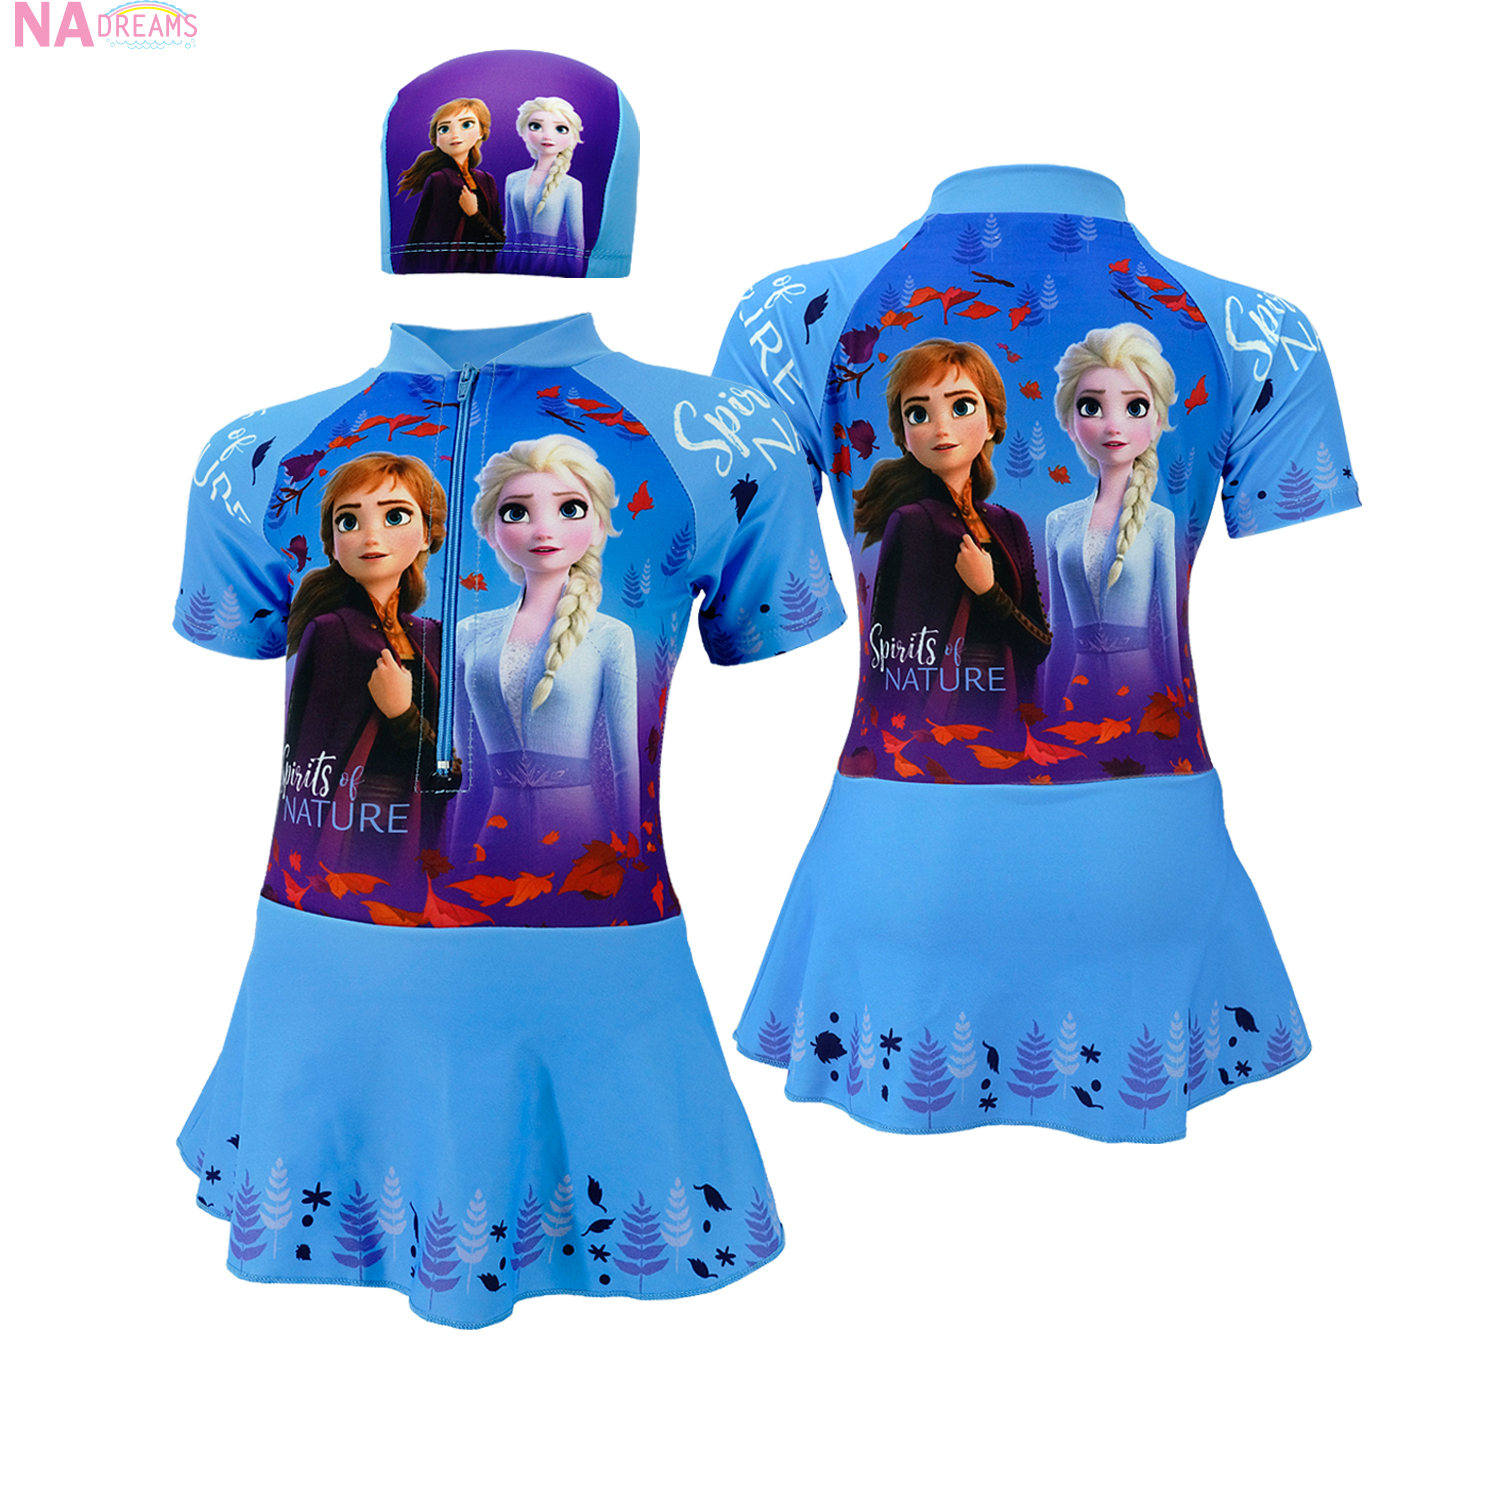 NADreams ชุดว่ายน้ำเด็กหญิง girl swimwear ลายการ์ตูนโฟรสเซ่น Frozen รุ่นเด็กเล็ก